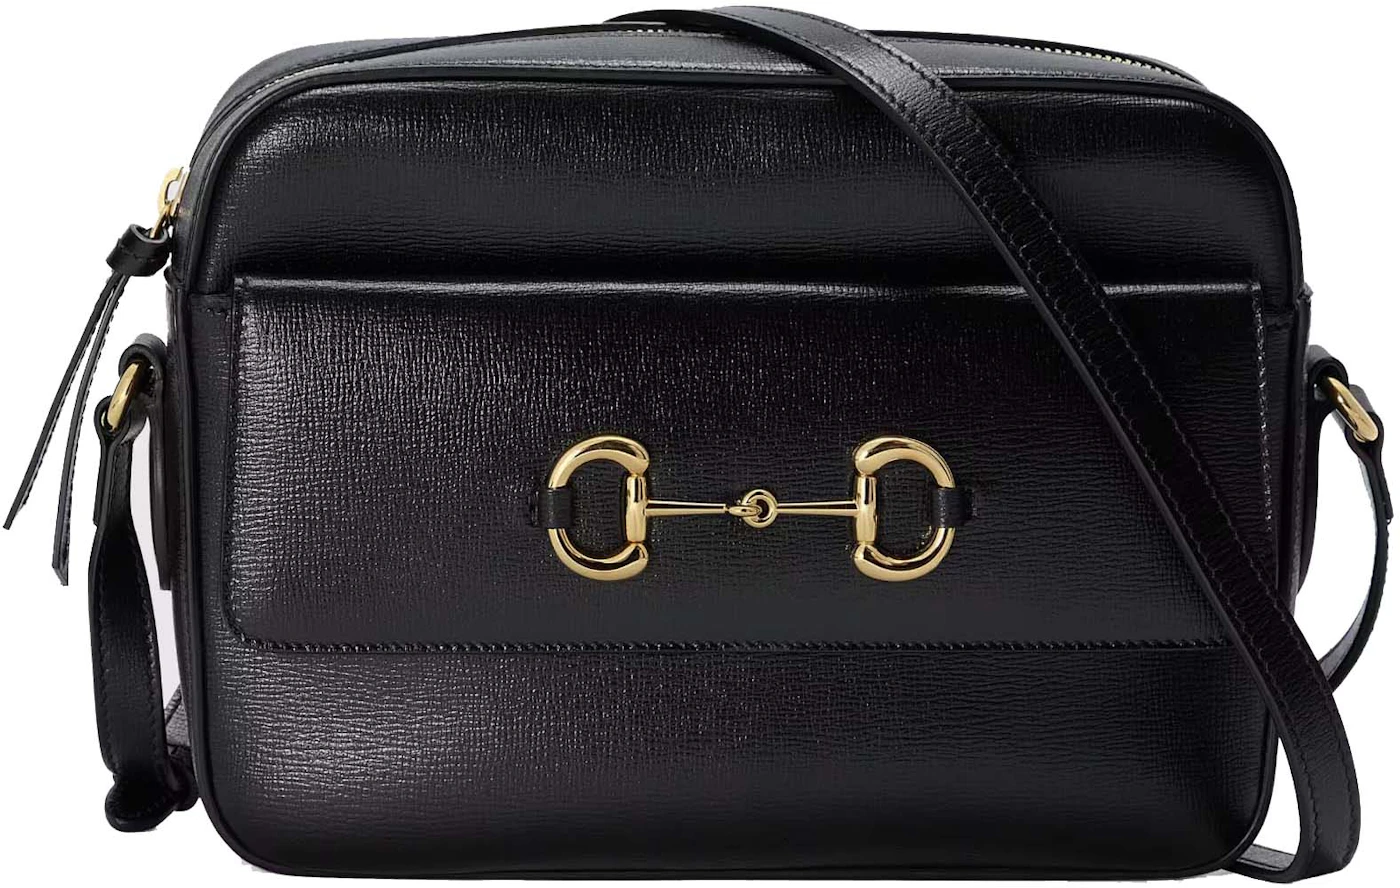 Gucci Horsebit Bag1955 Shoulder Bag in Black